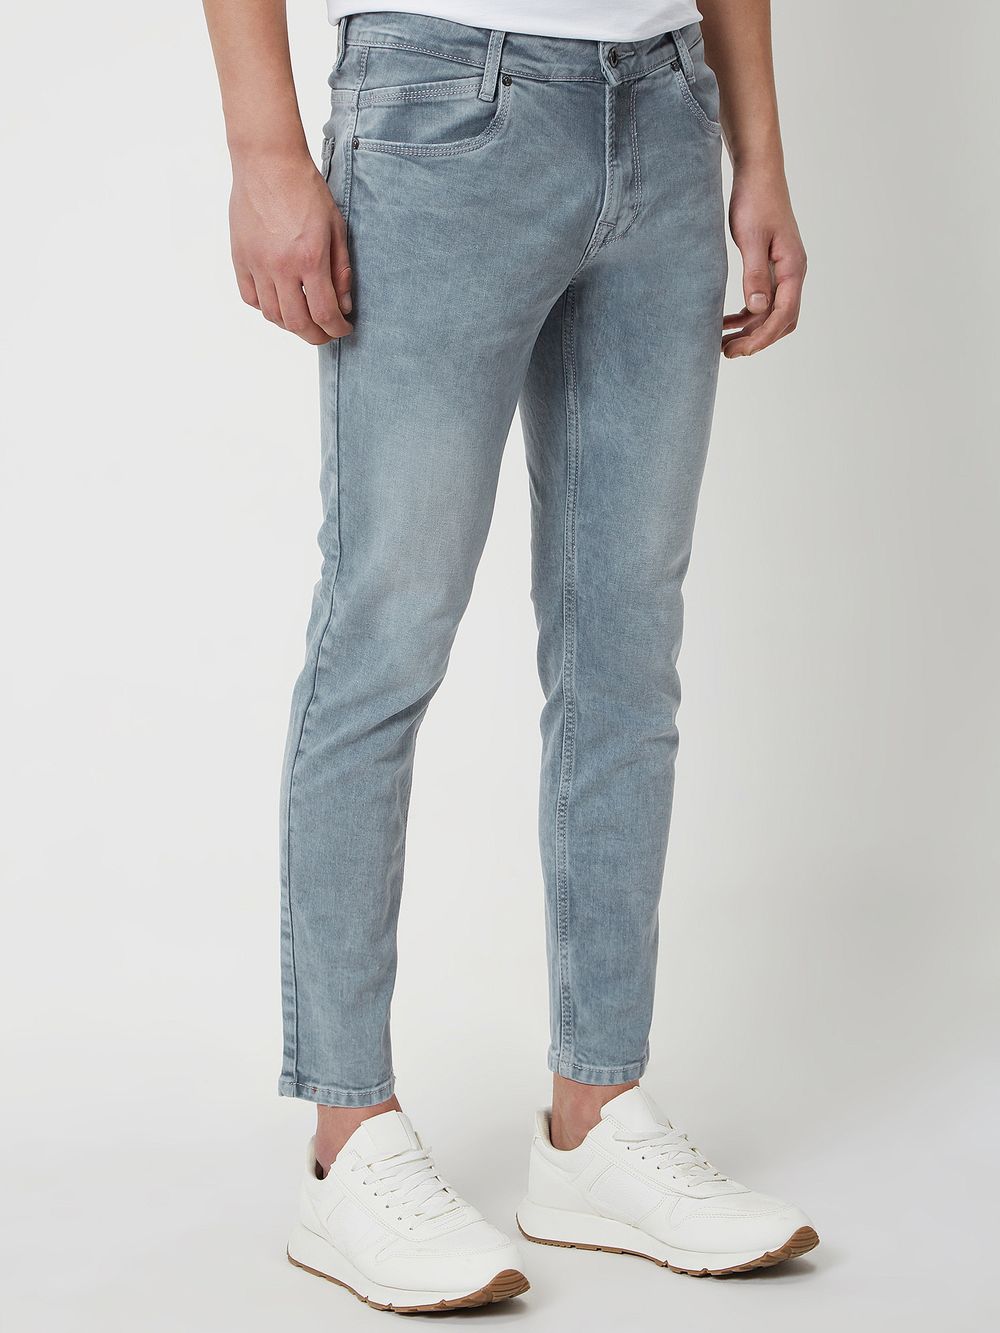 Grey Ankle Length Originals Stretch Jeans